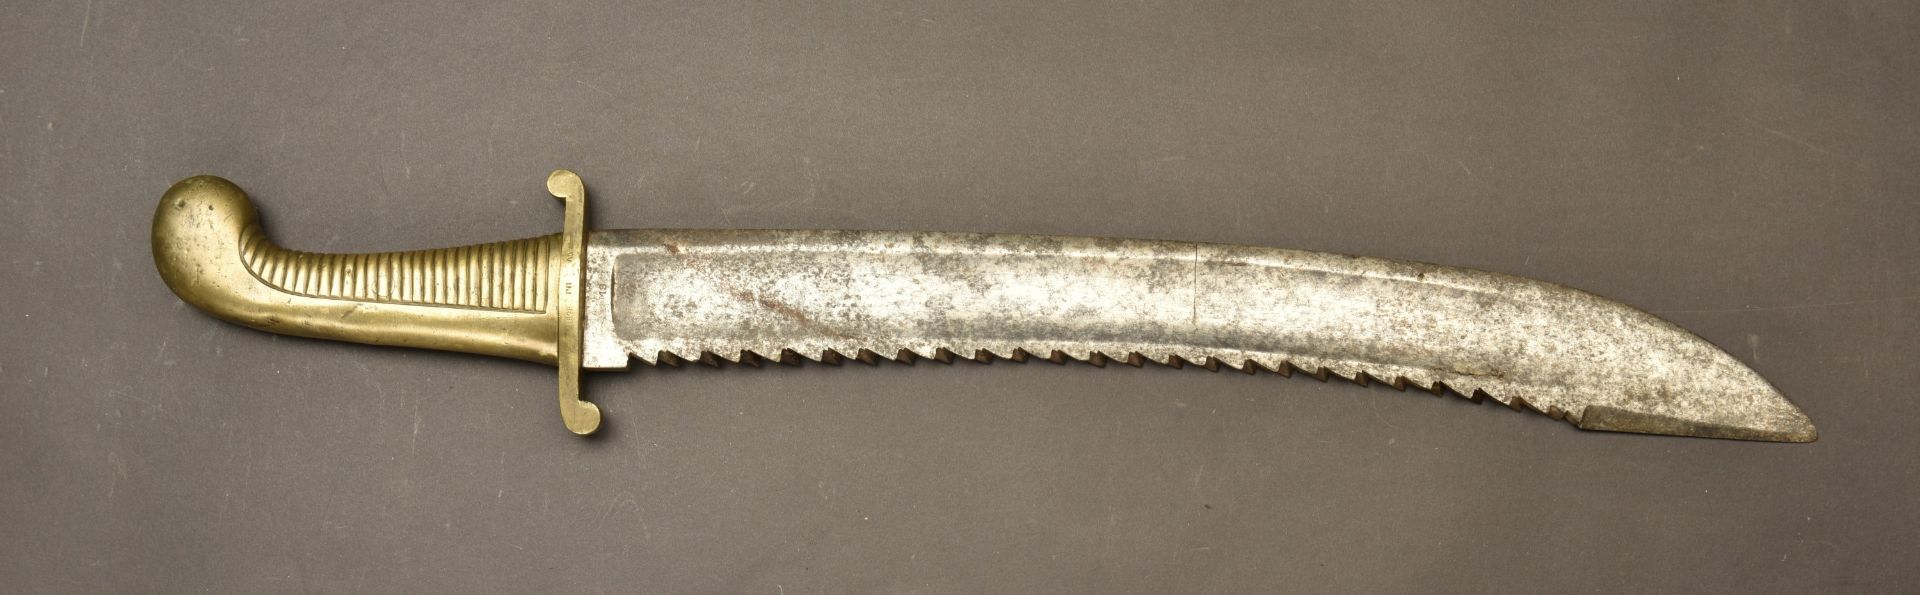 Glaive de Pionnier russe modele 1827. Russian engineer sawback sword pattern 1827. Russland Pionier